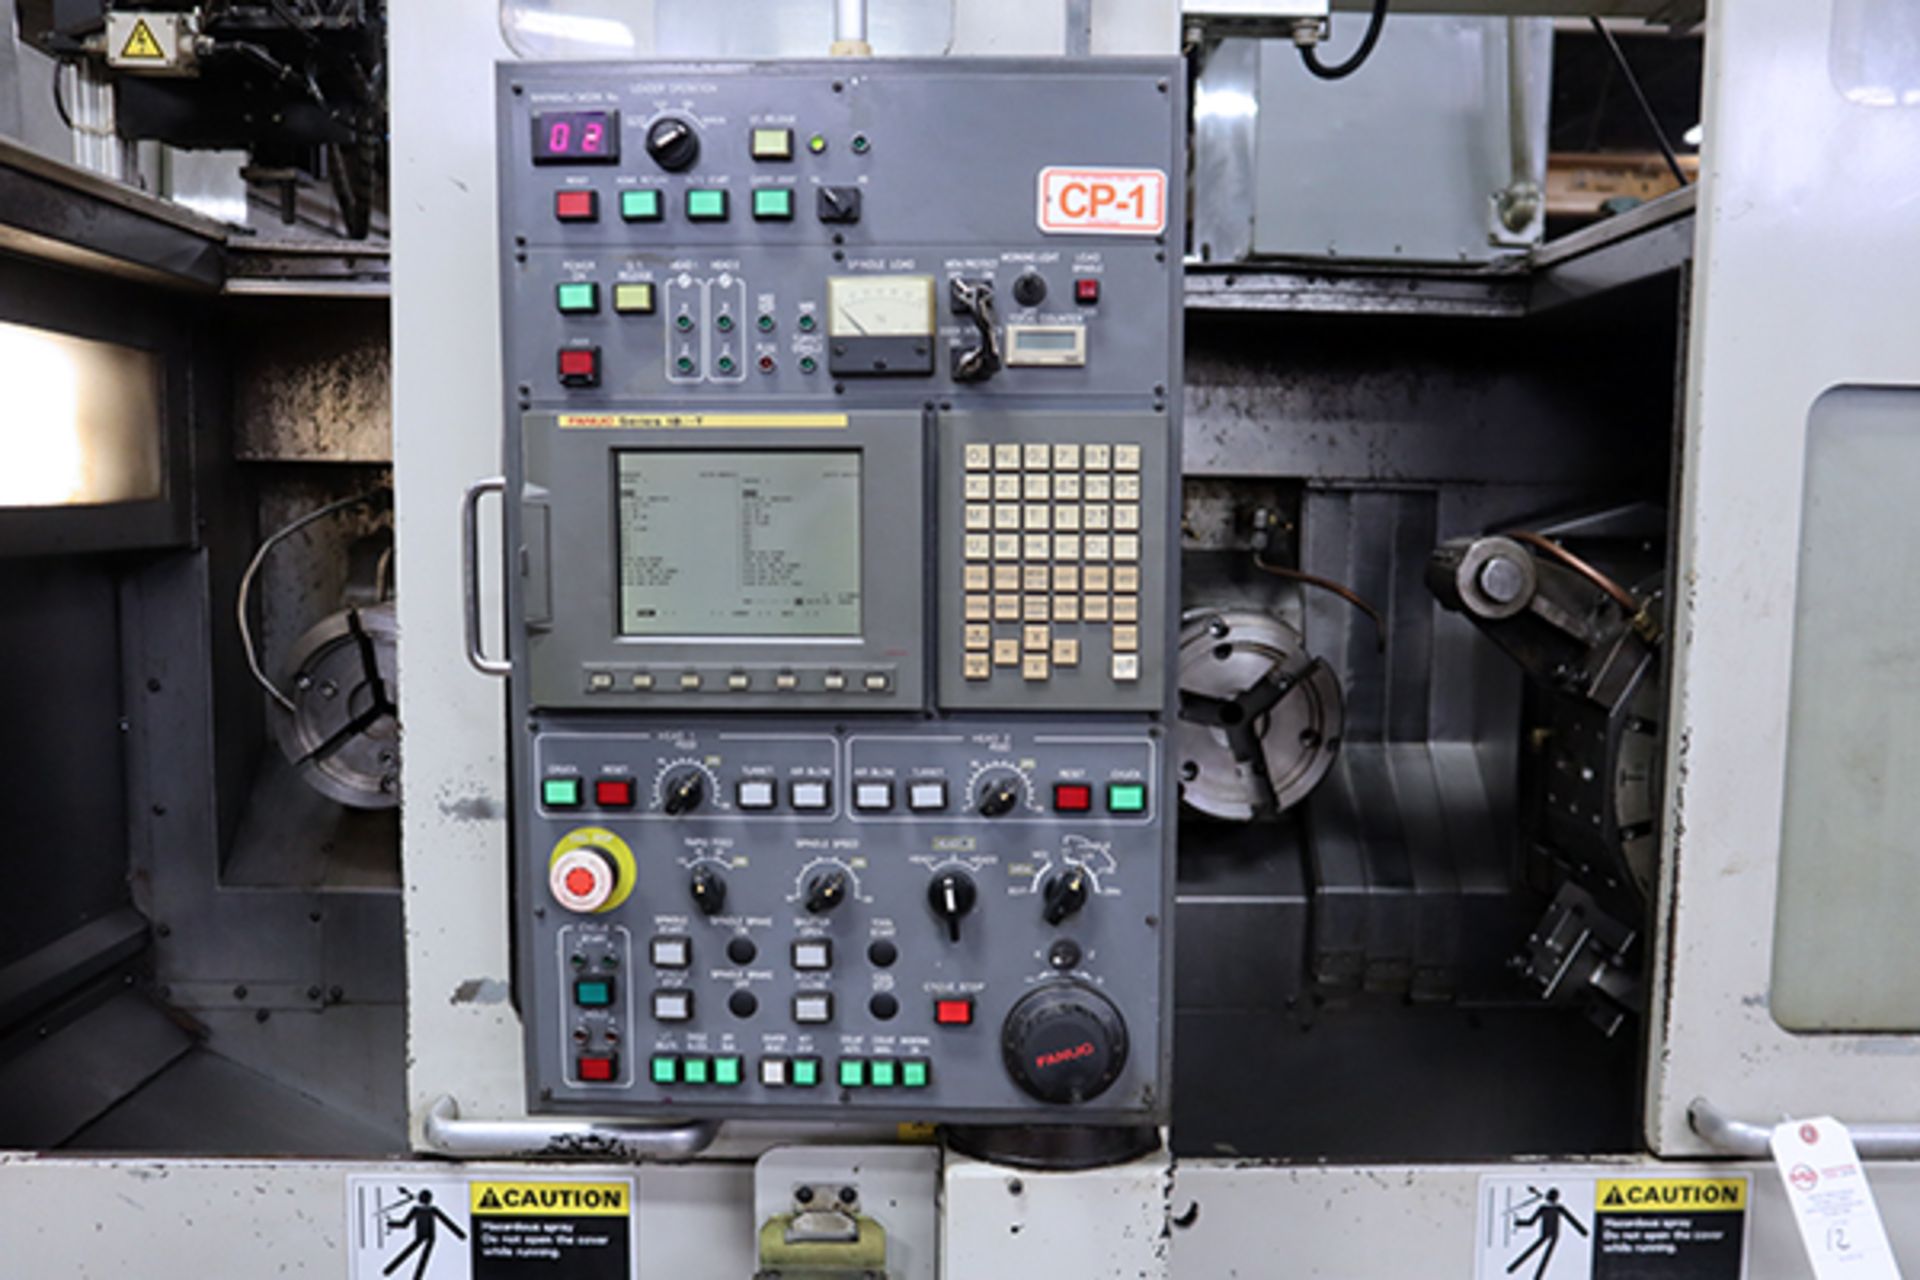 Kitako MT2-200W 4-Spindle CNC Horizontal Turning Center (2002) - Image 9 of 16